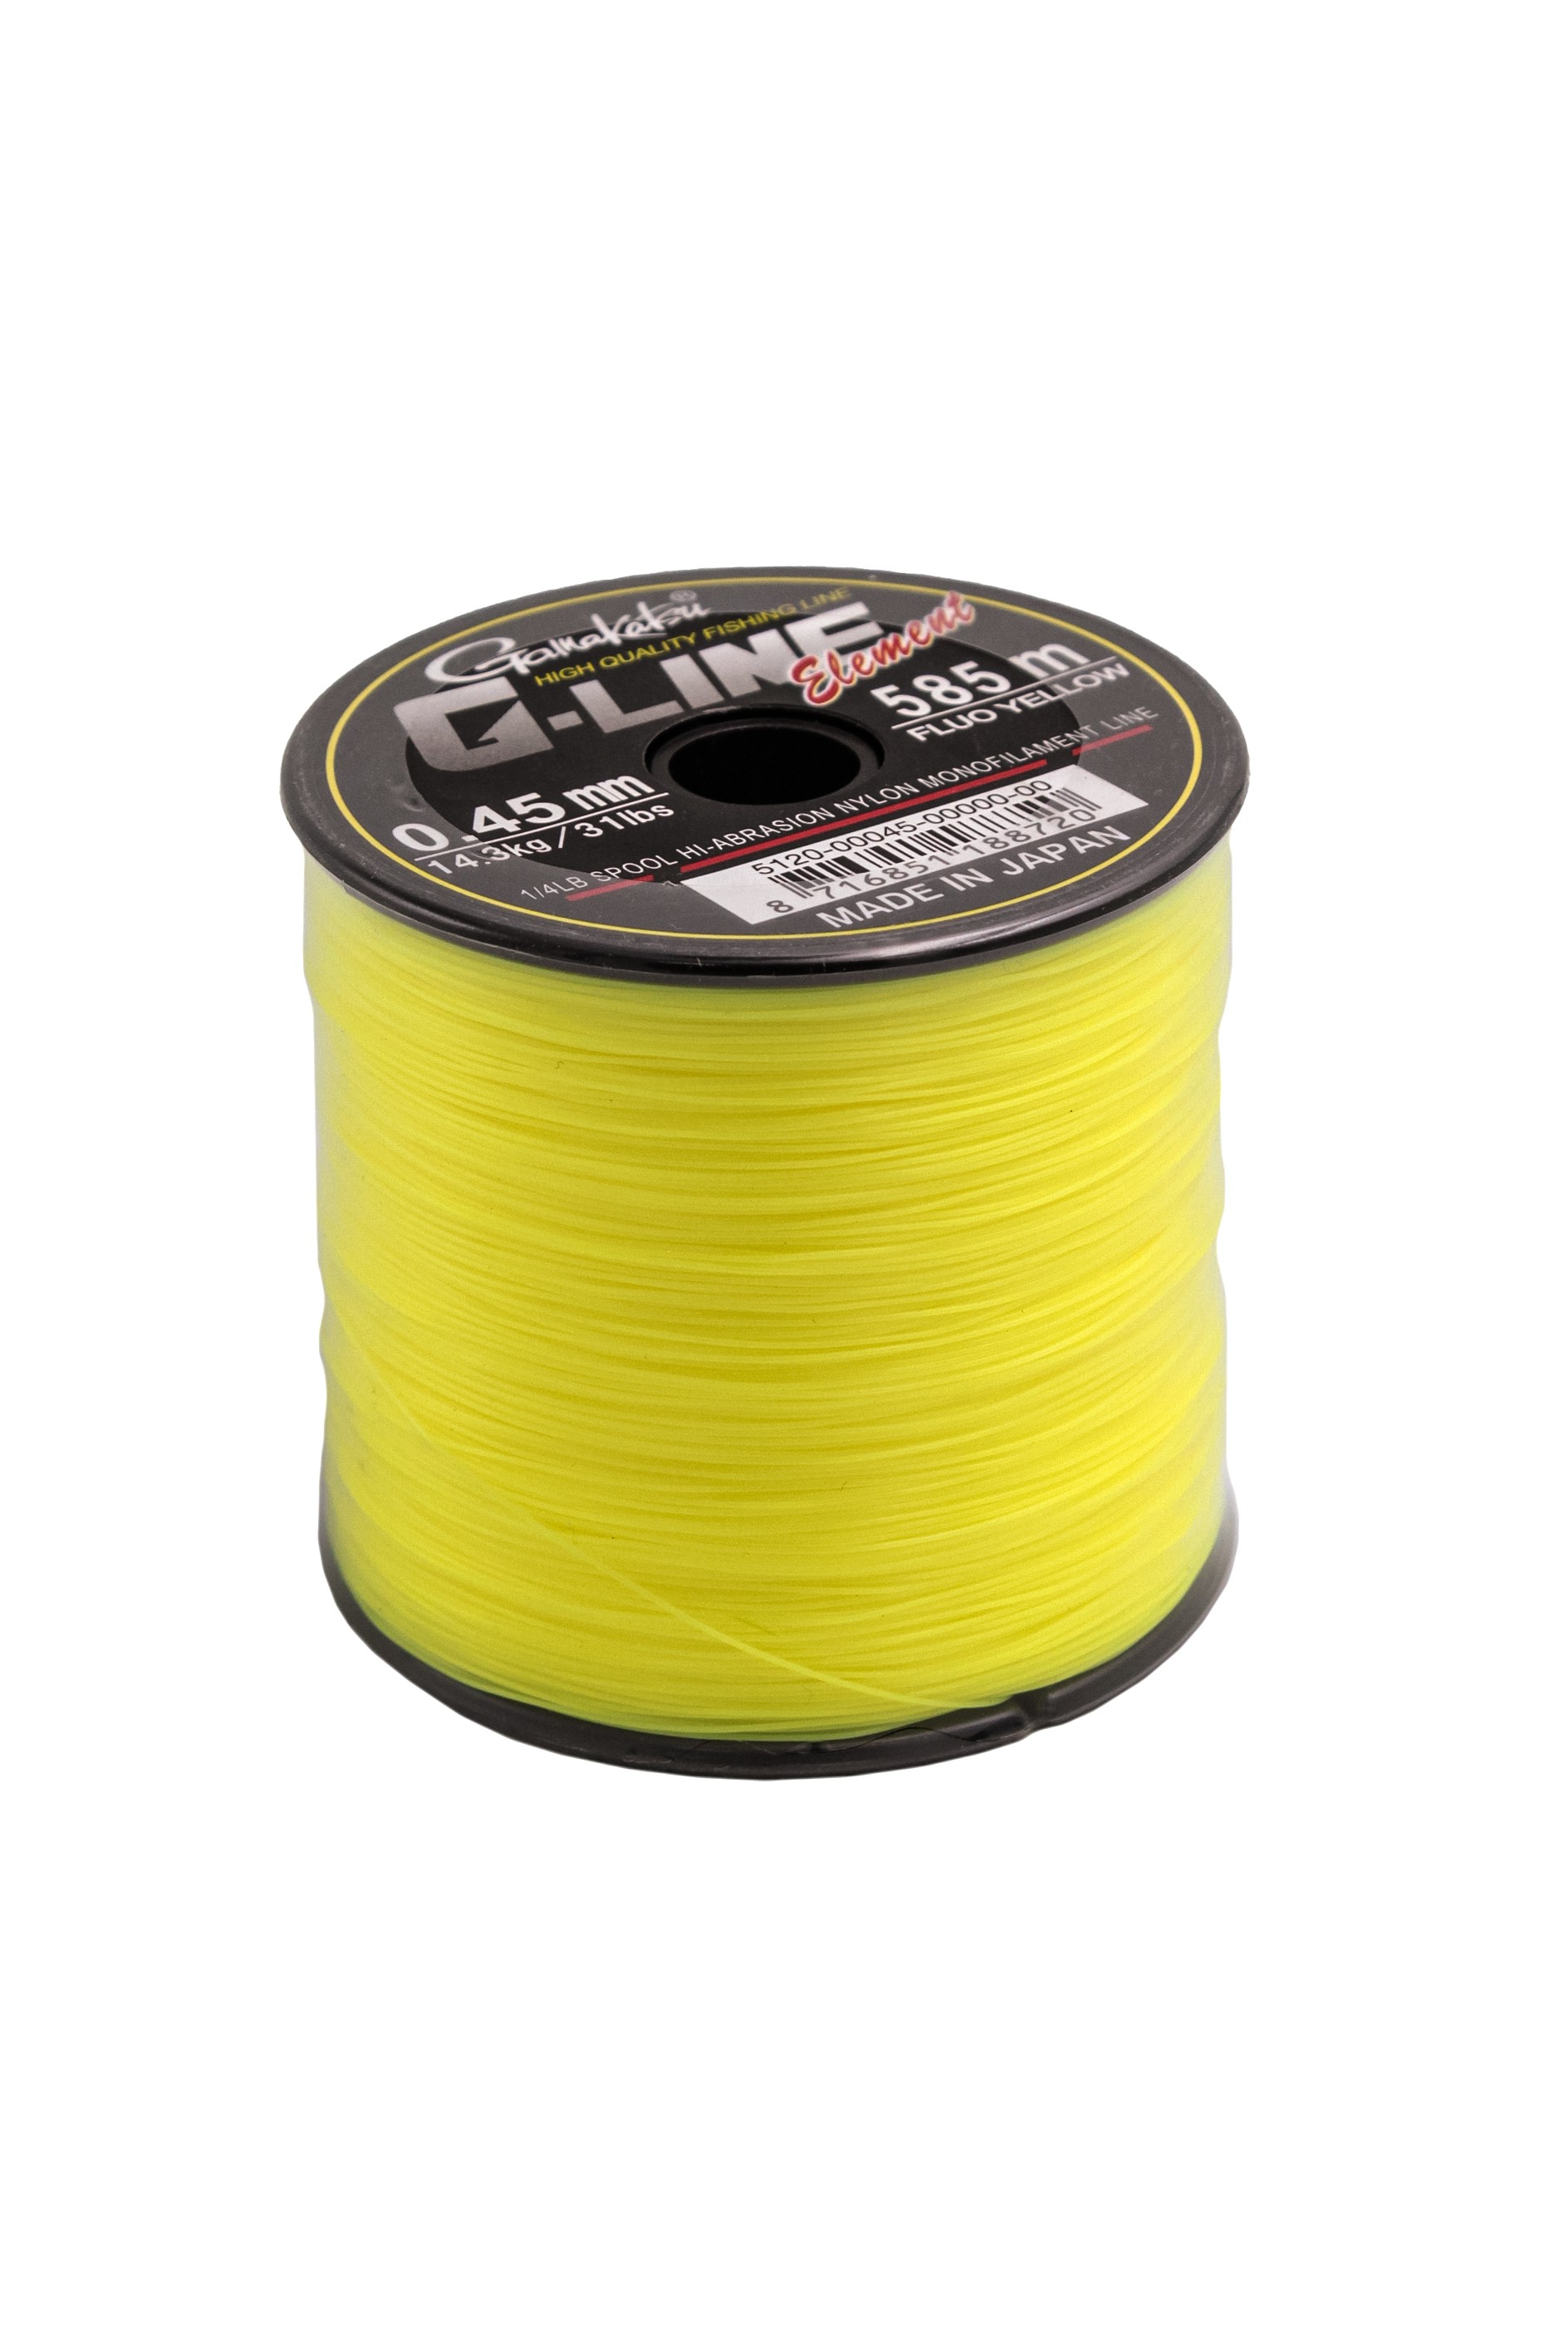 Леска Gamakatsu G-line element F-yellow 0.45мм 585м - фото 1